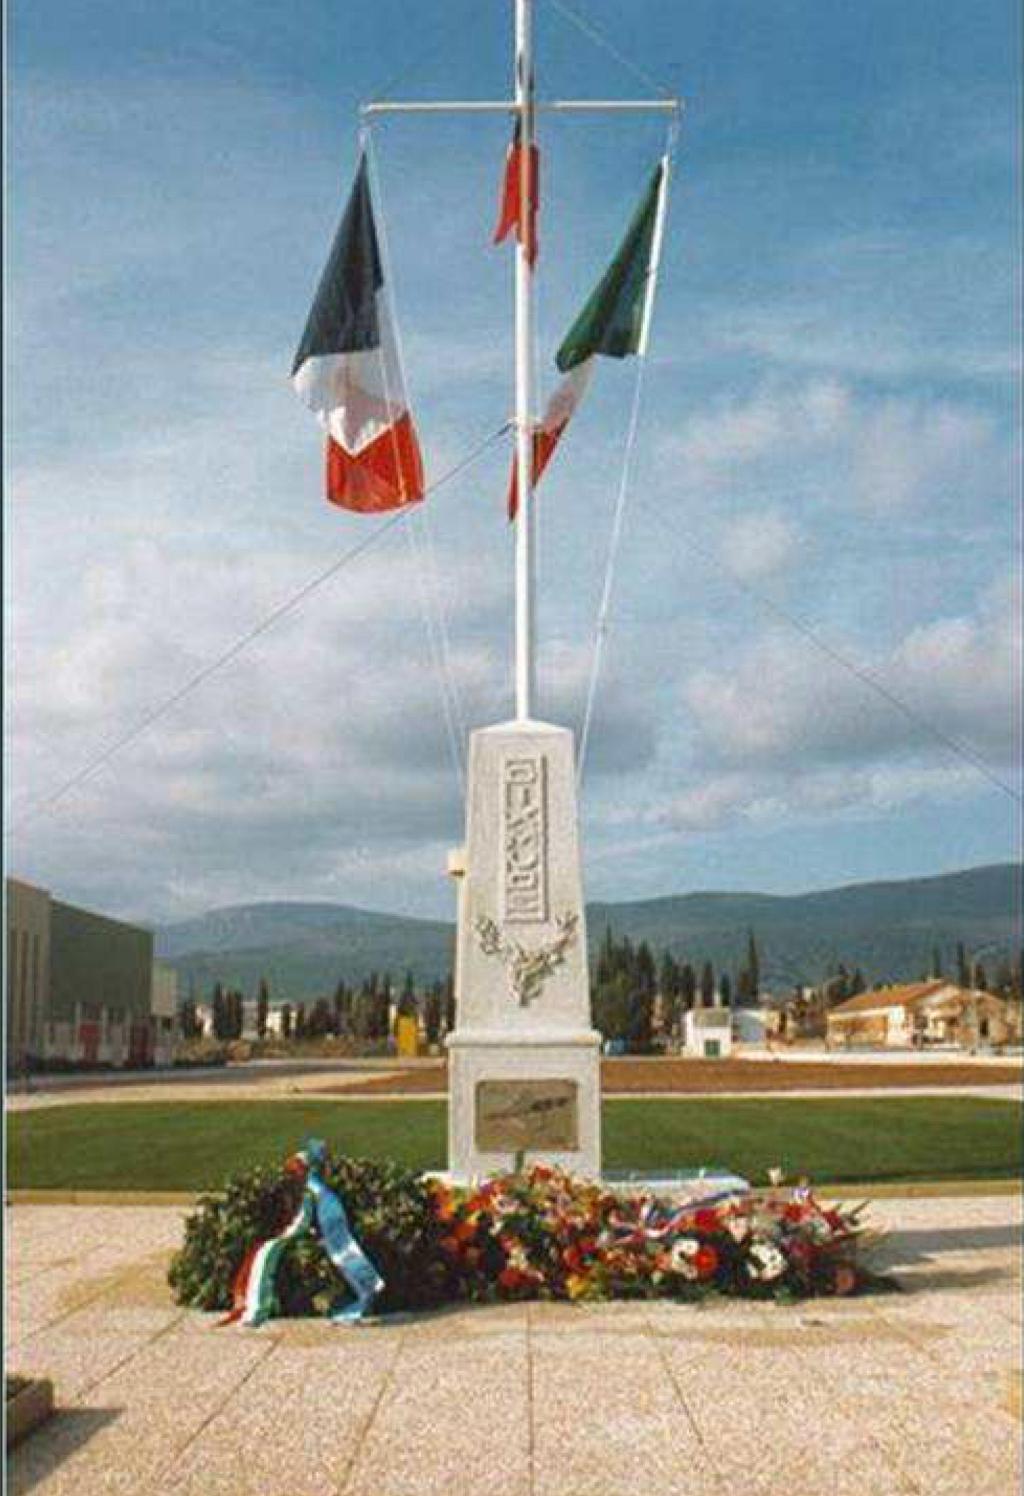 Dixmude memorial located on Base Aeronavale Cuers-Pierrefeu